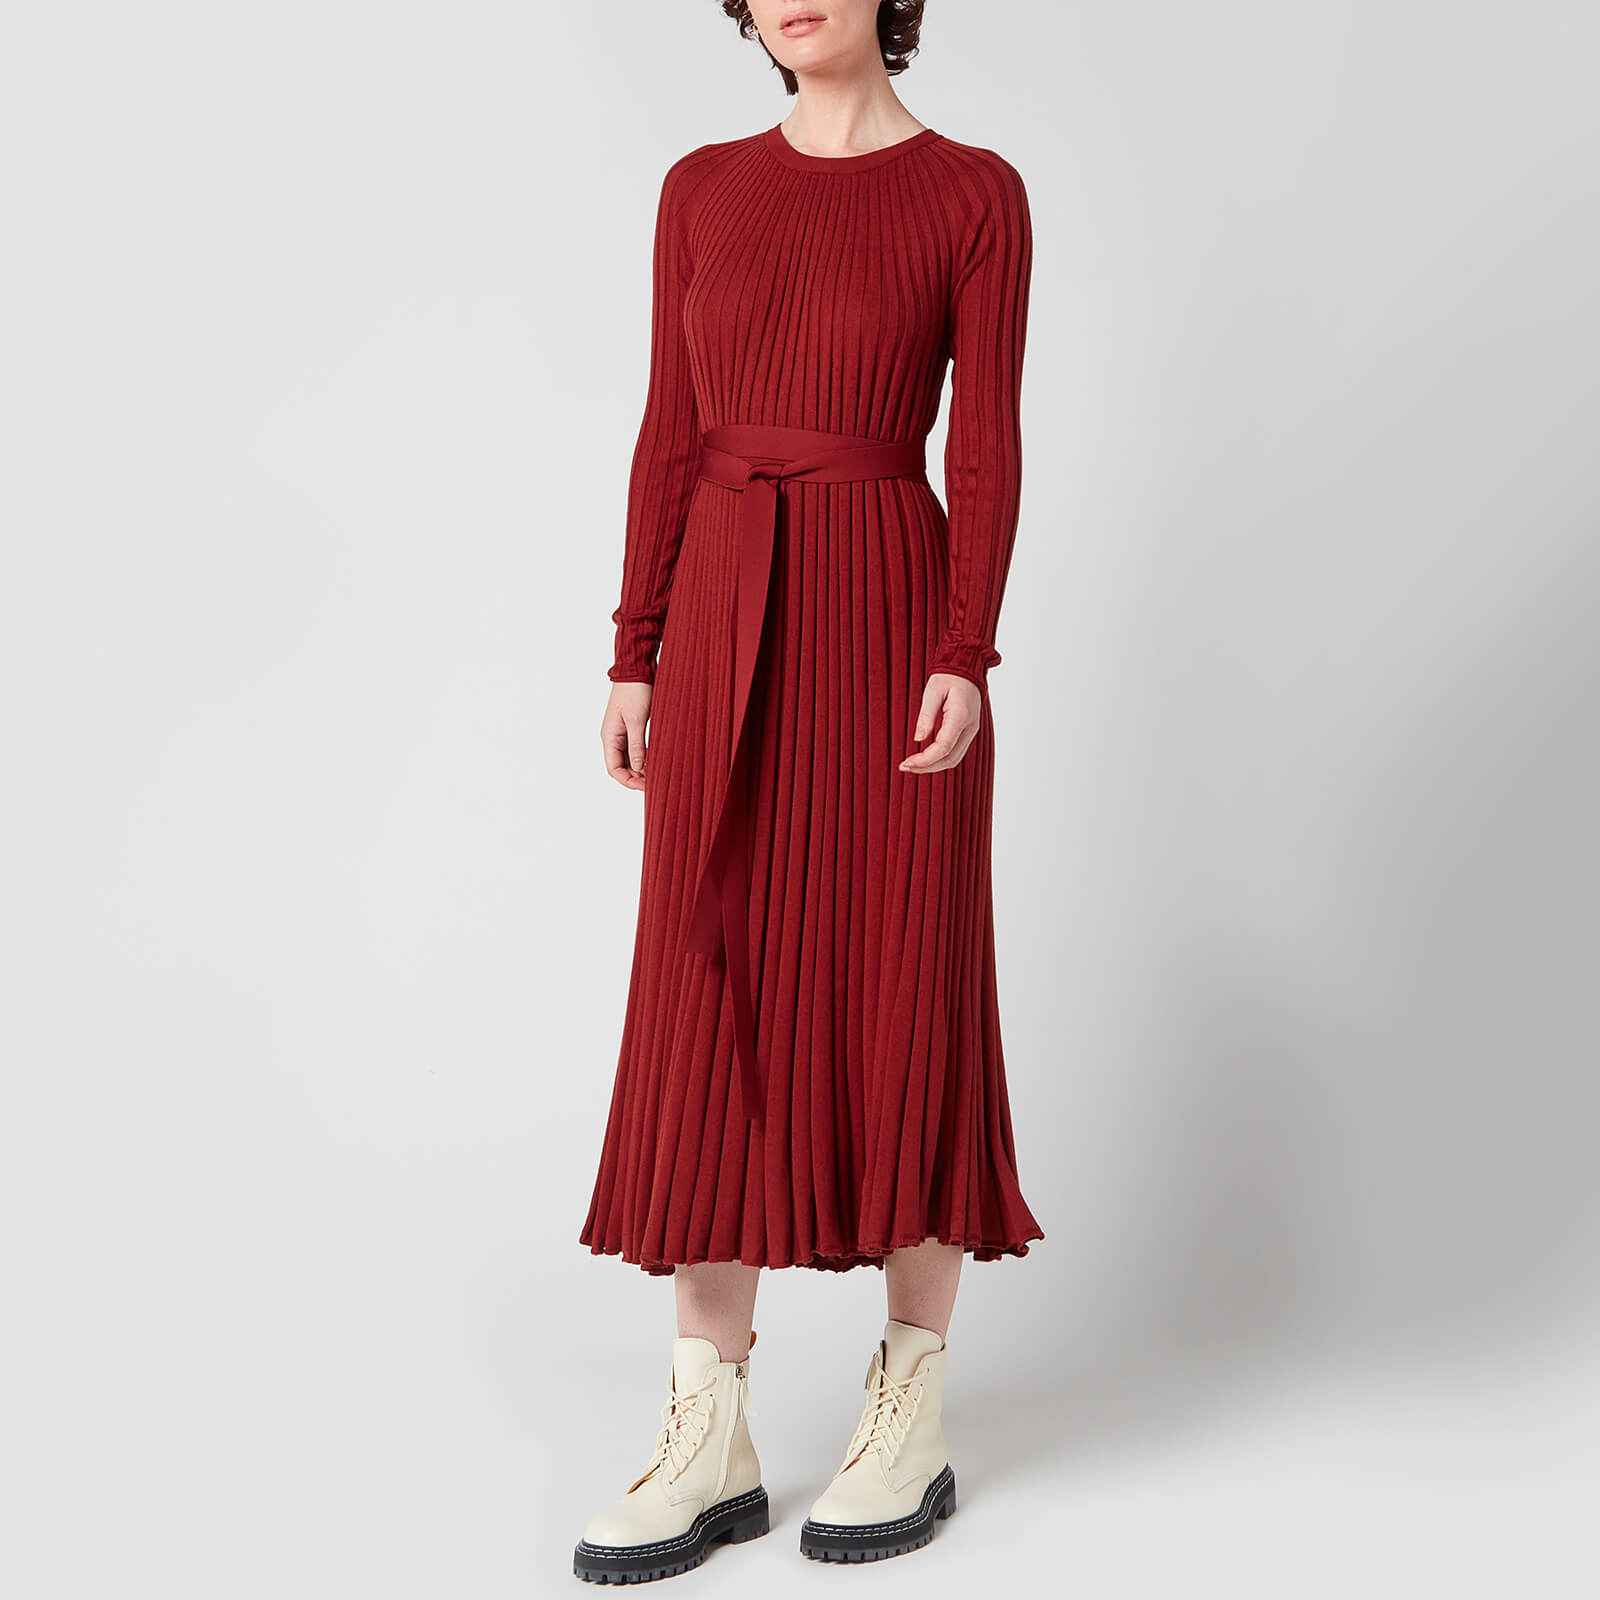 Proenza Schouler Women's Silk Cashmere Pleated Dress - Rust - M